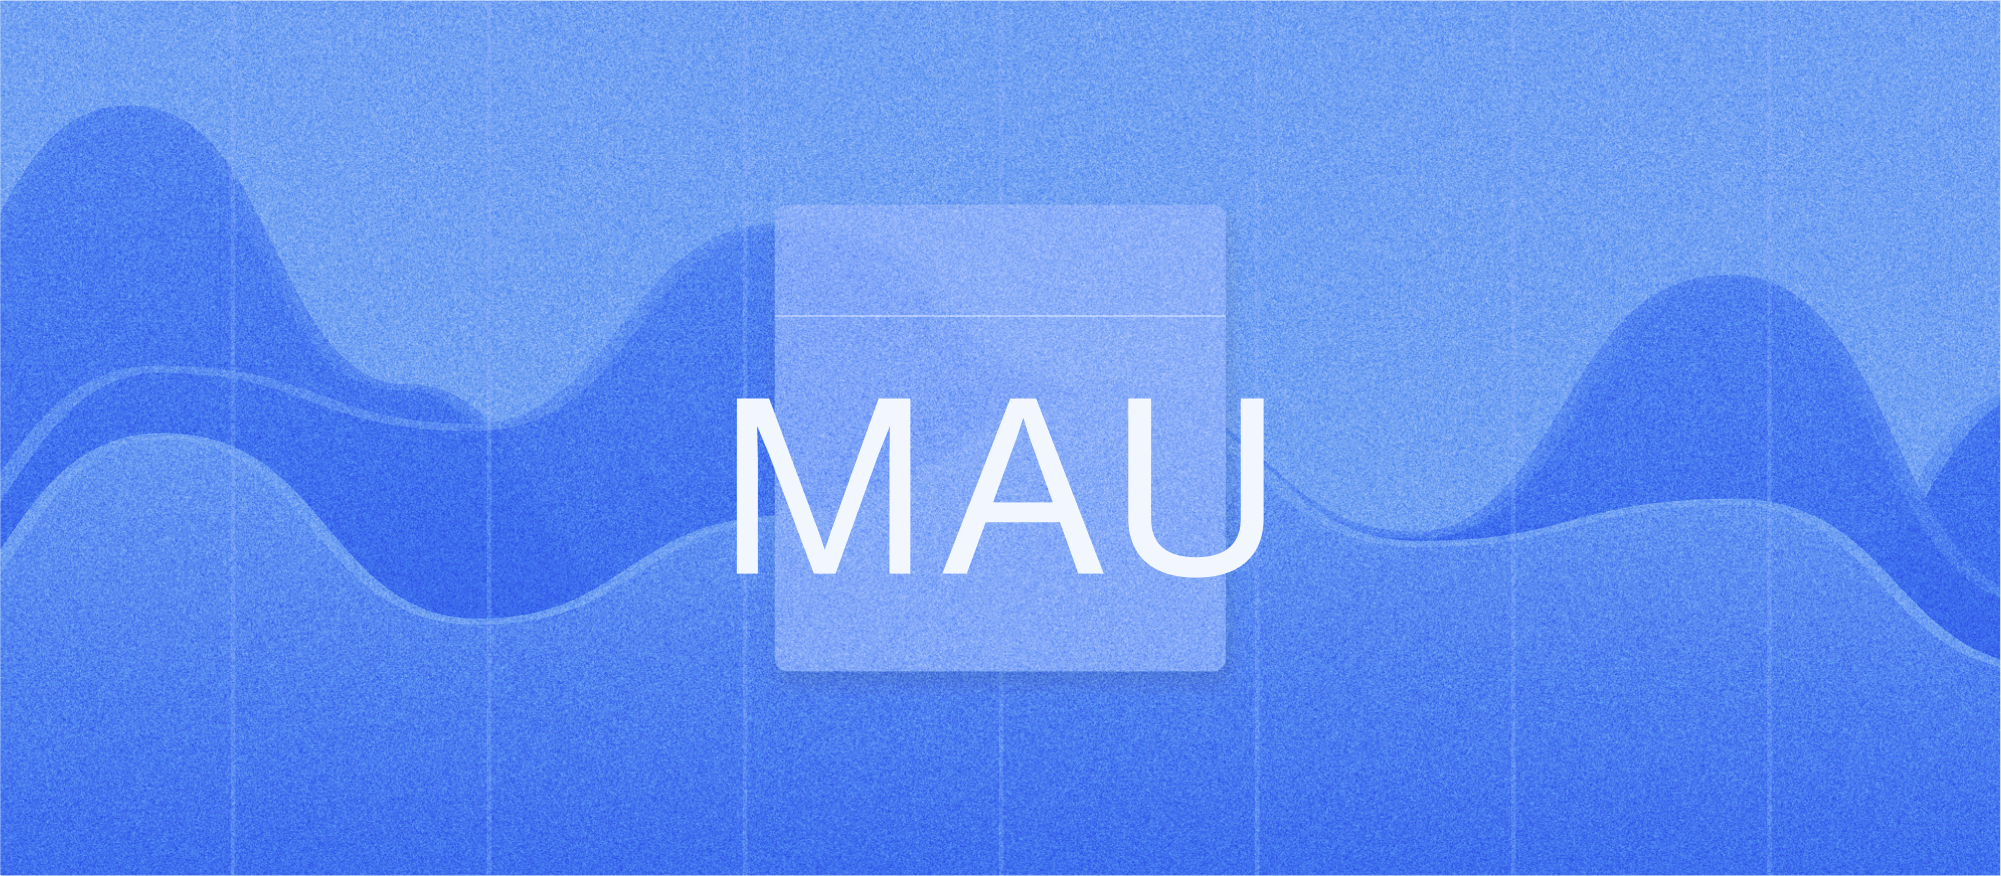 The importance of MAU